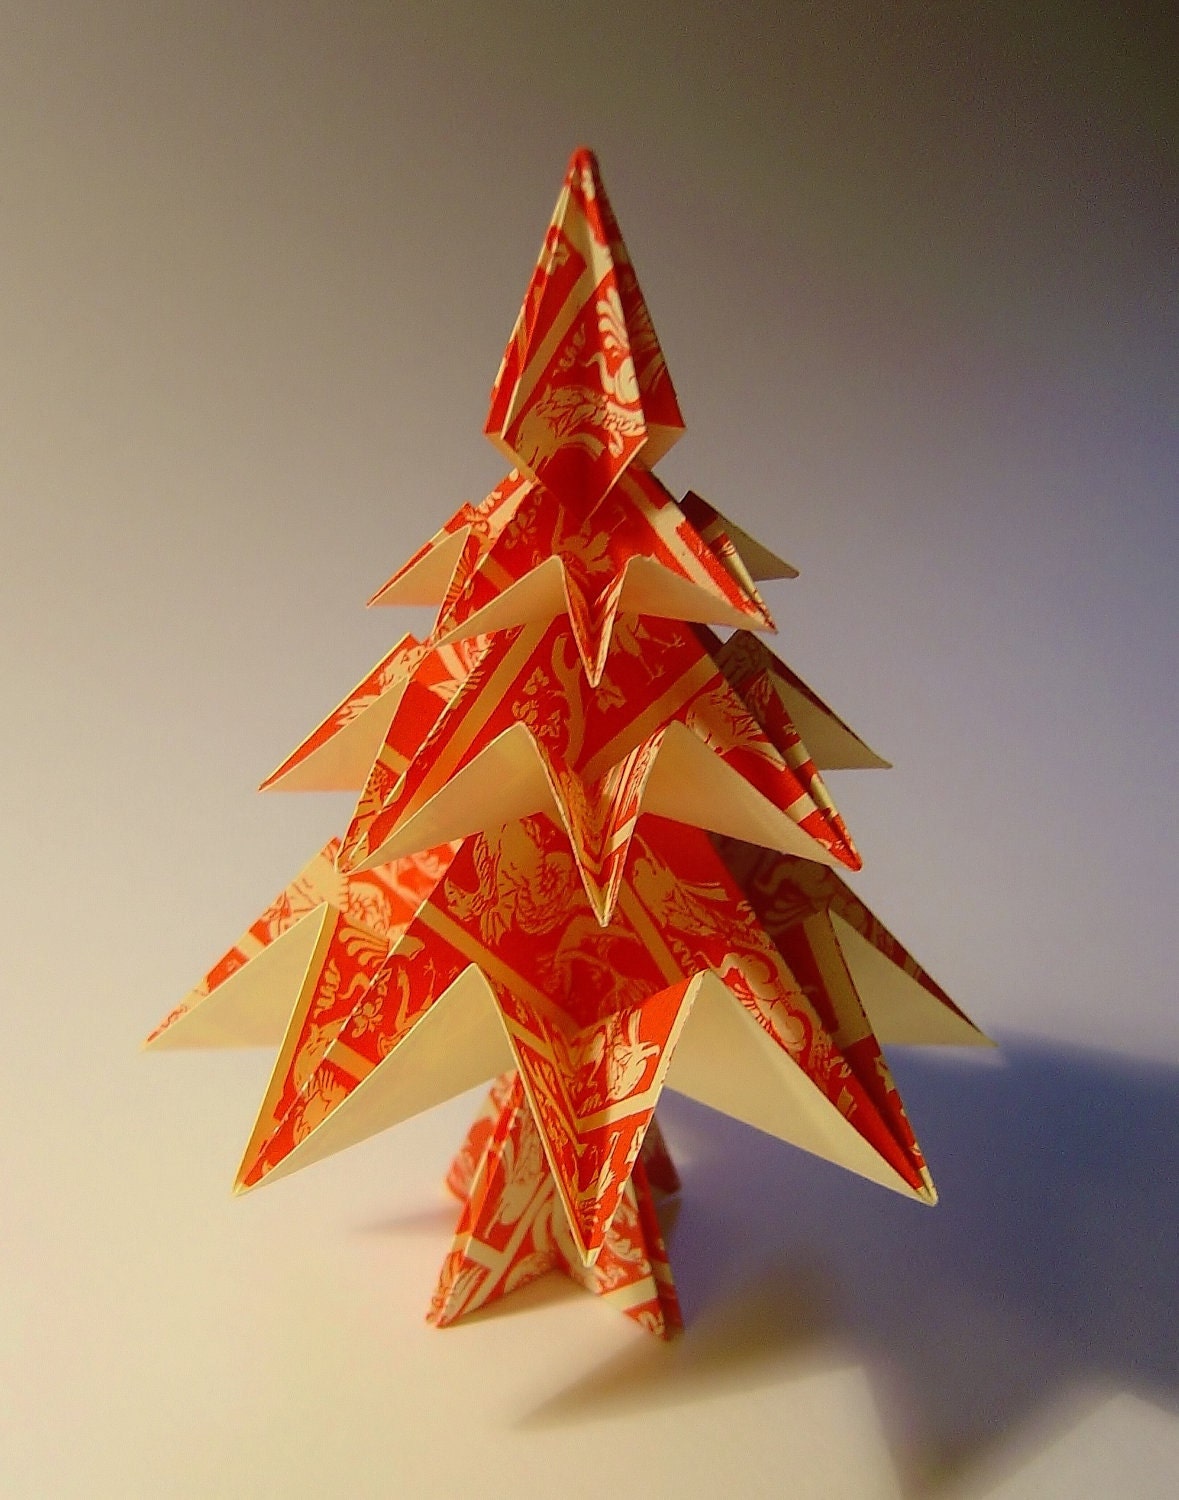 Small Origami Christmas Tree . Ornament for home or Christmas Table.